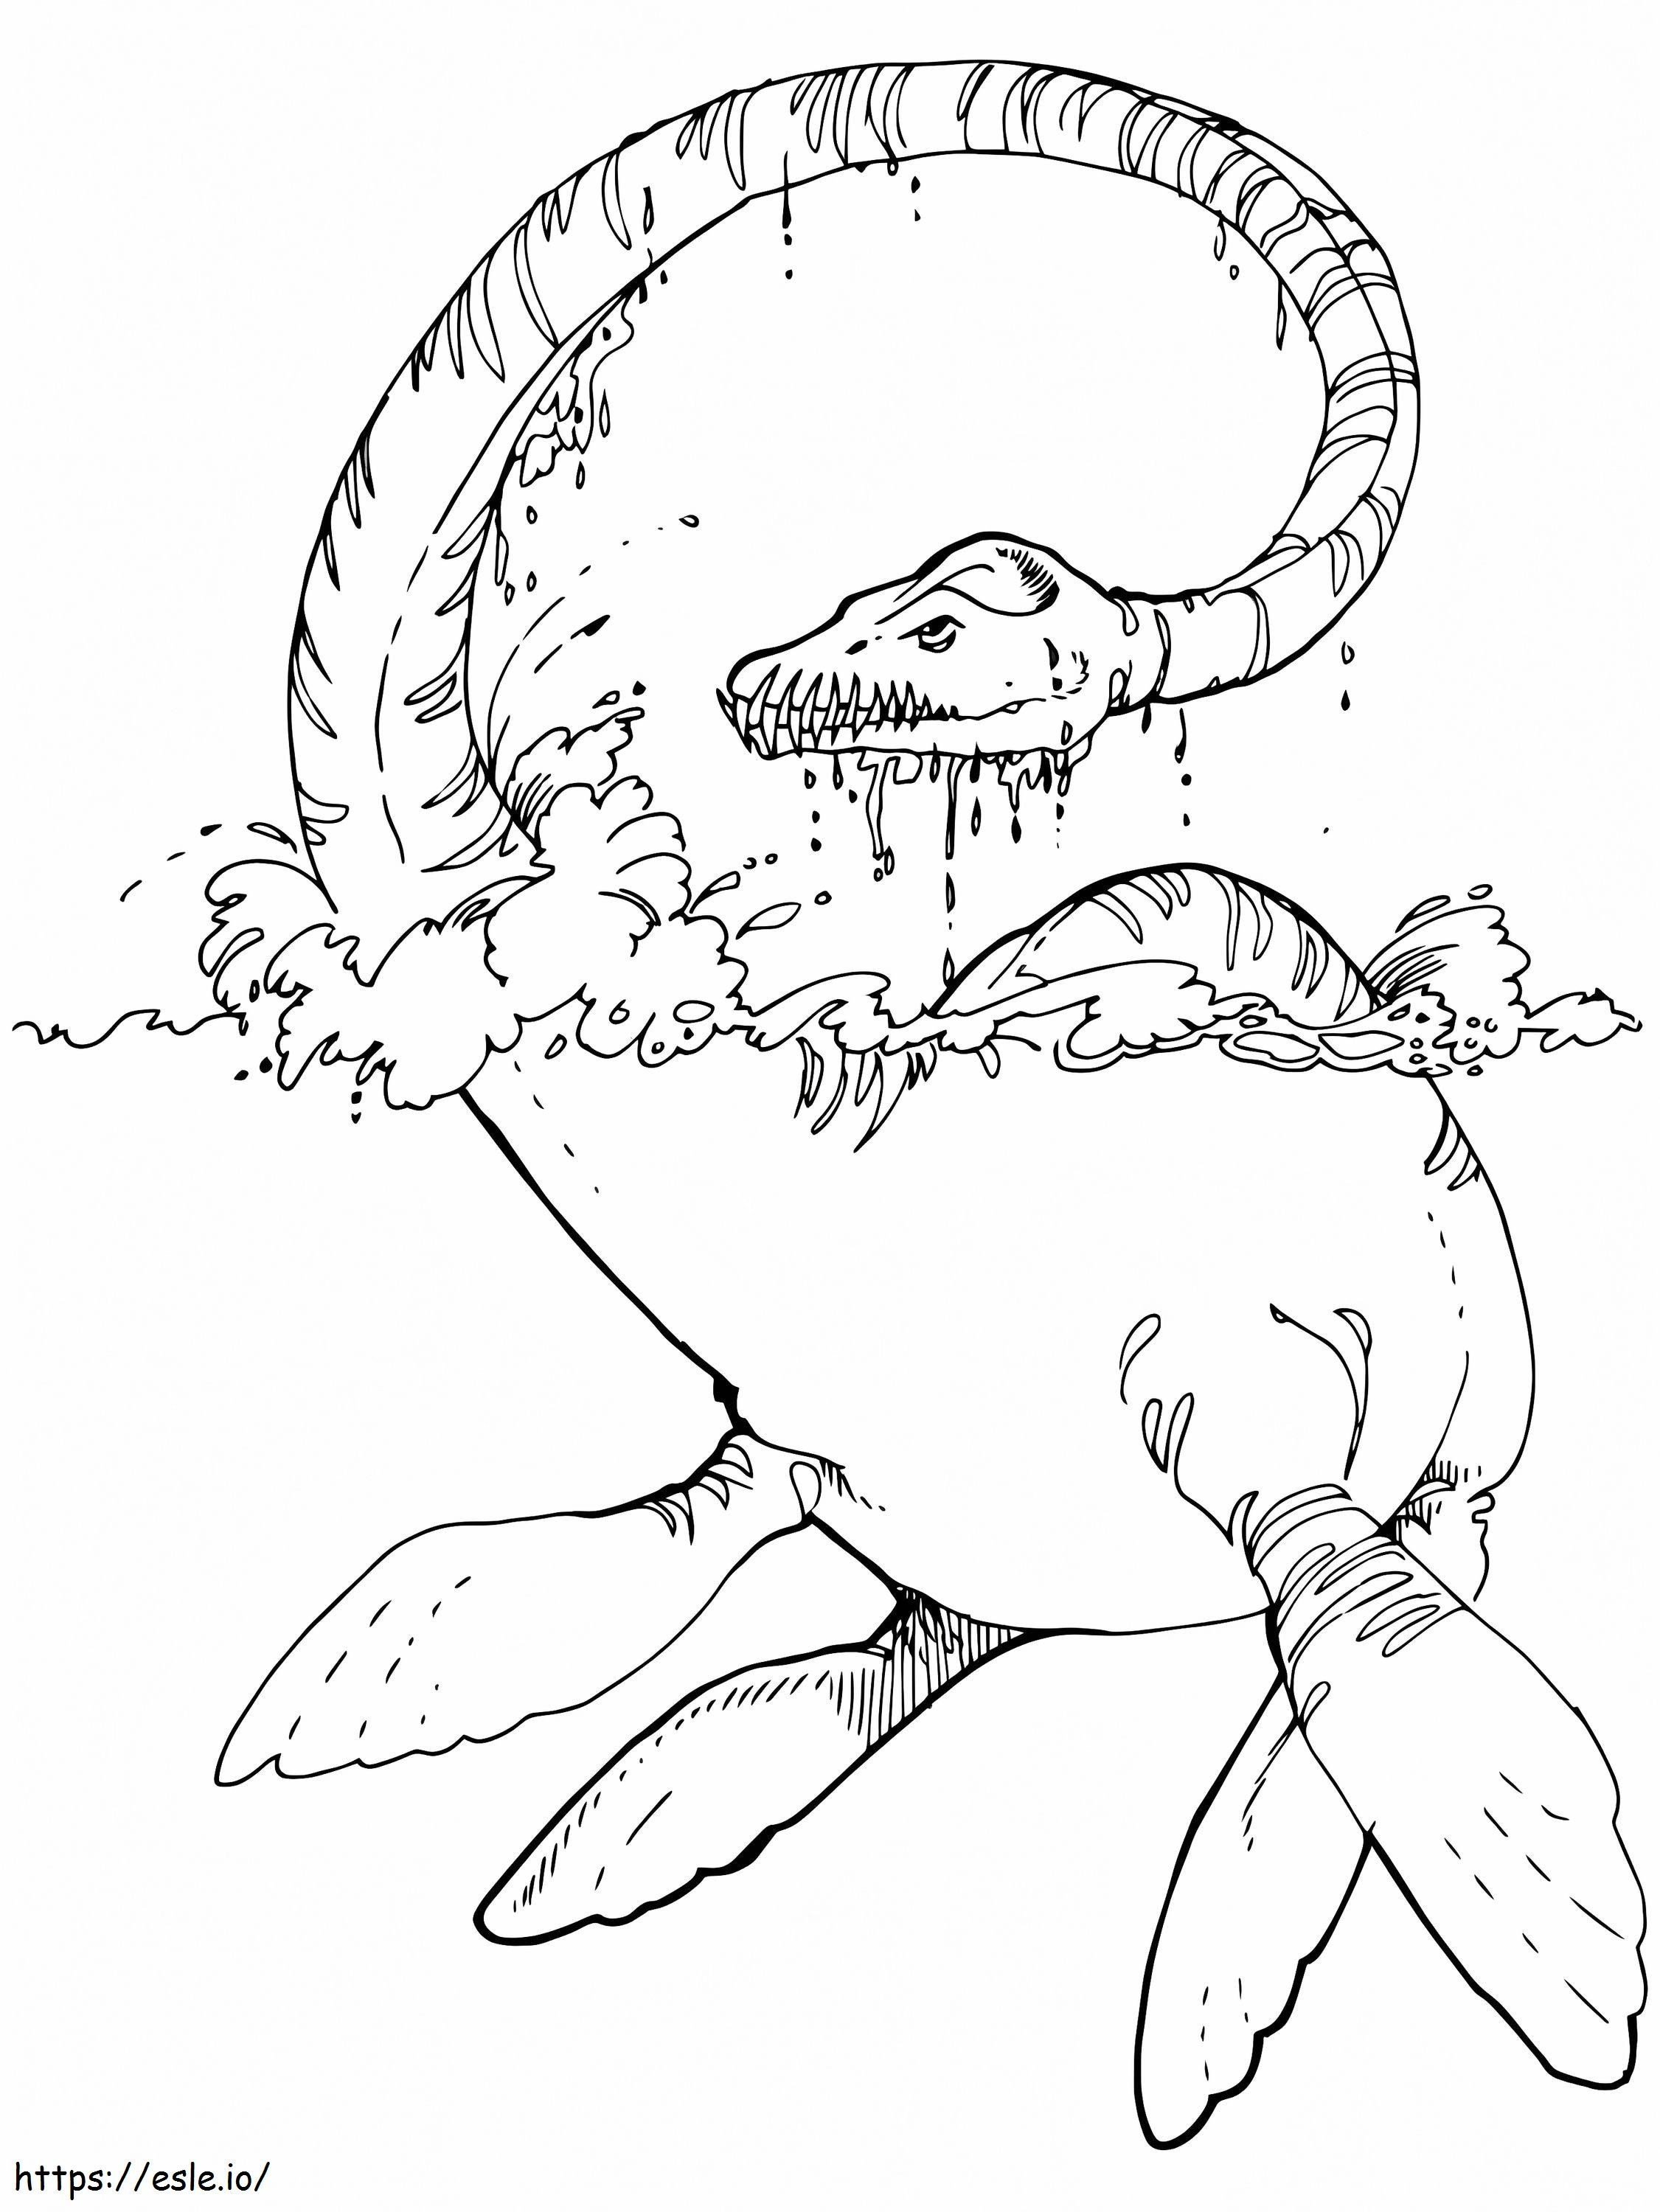 Printable Plesiosaur coloring page